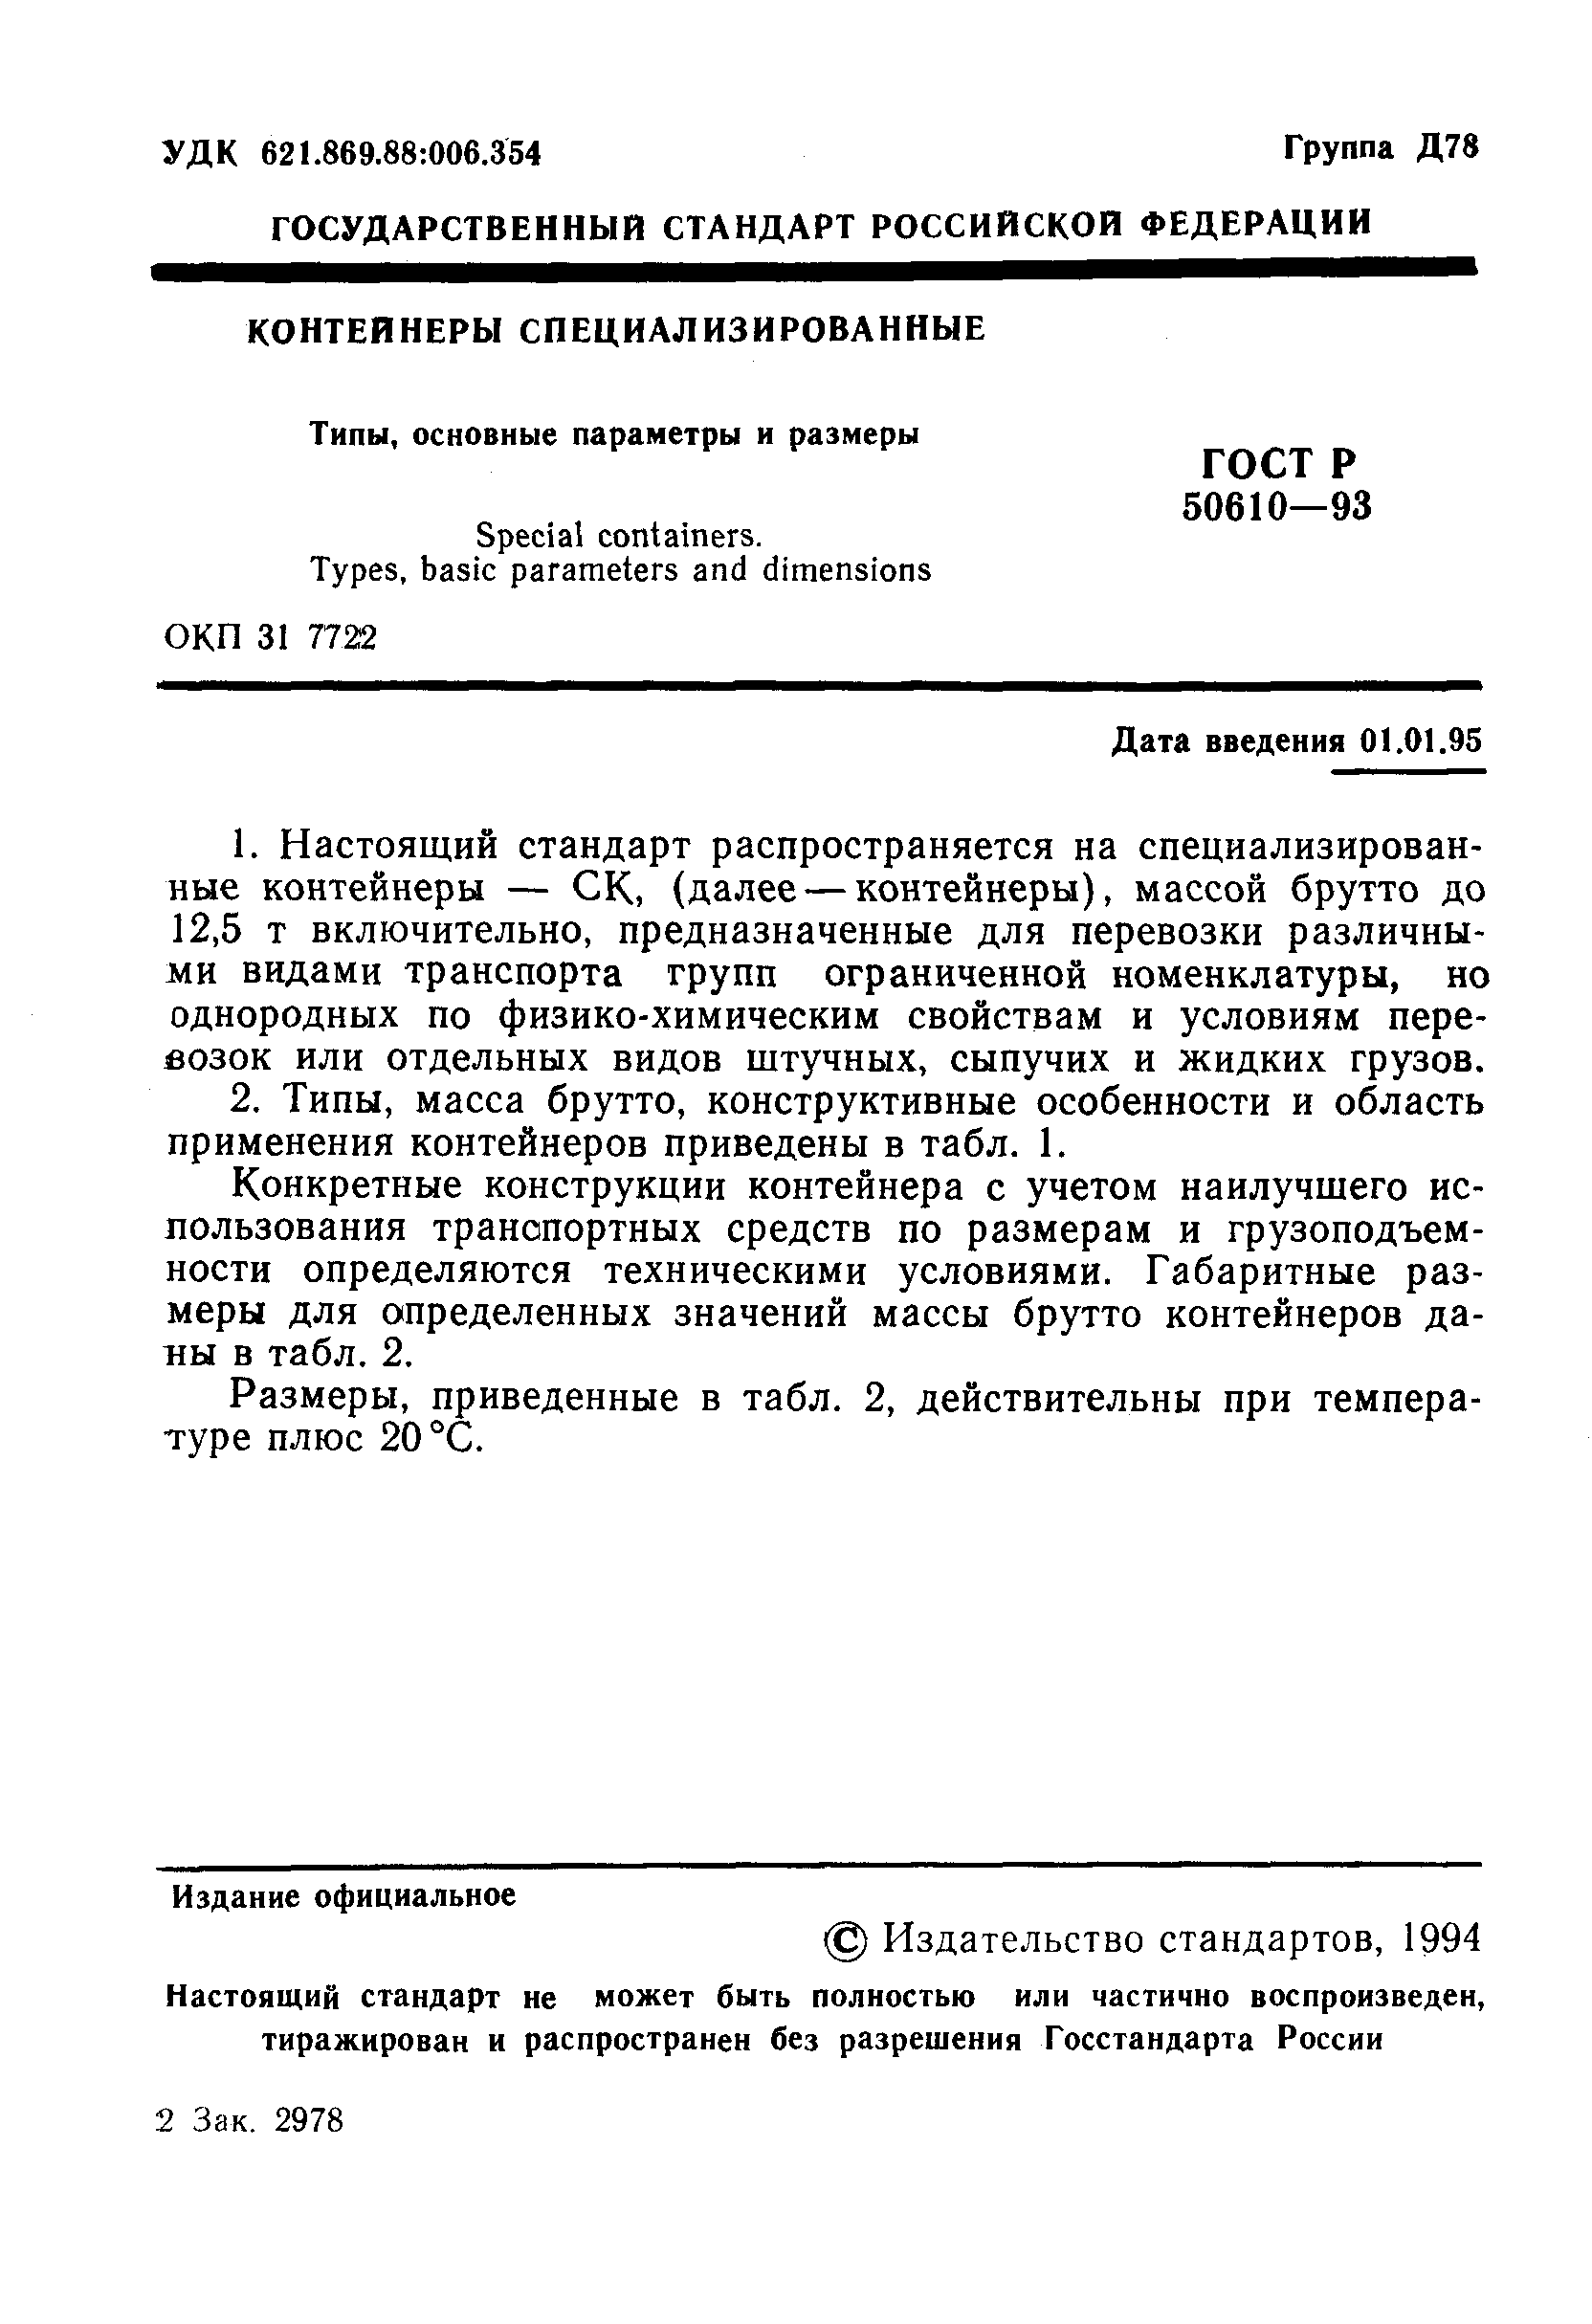 ГОСТ Р 50610-93